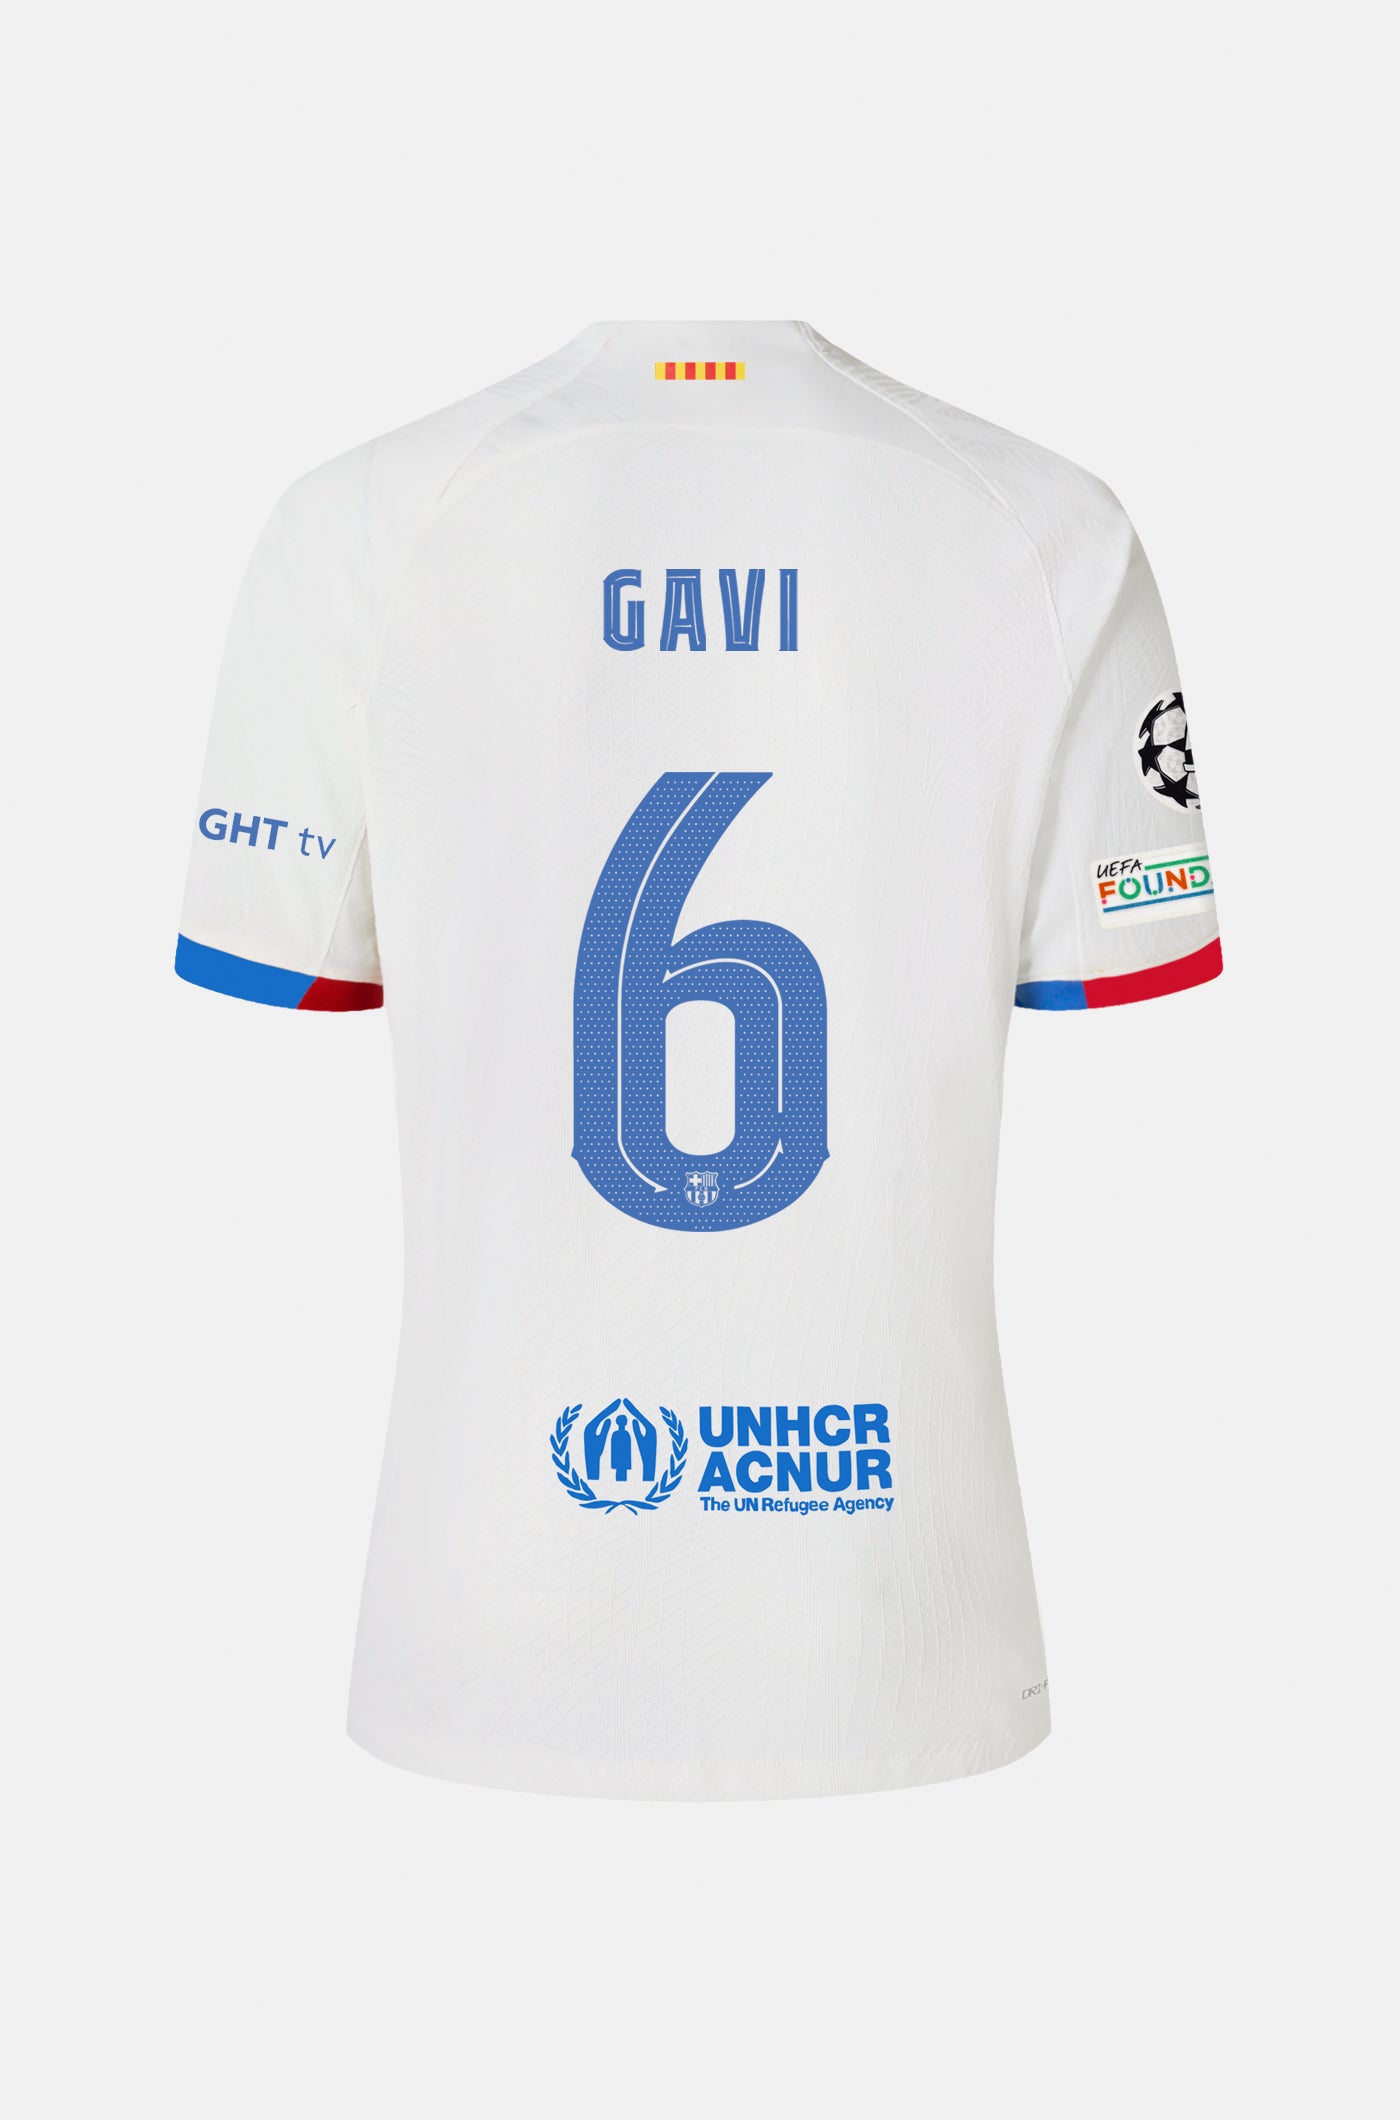 UCL FC Barcelona away shirt 23/24 Player’s Edition - GAVI